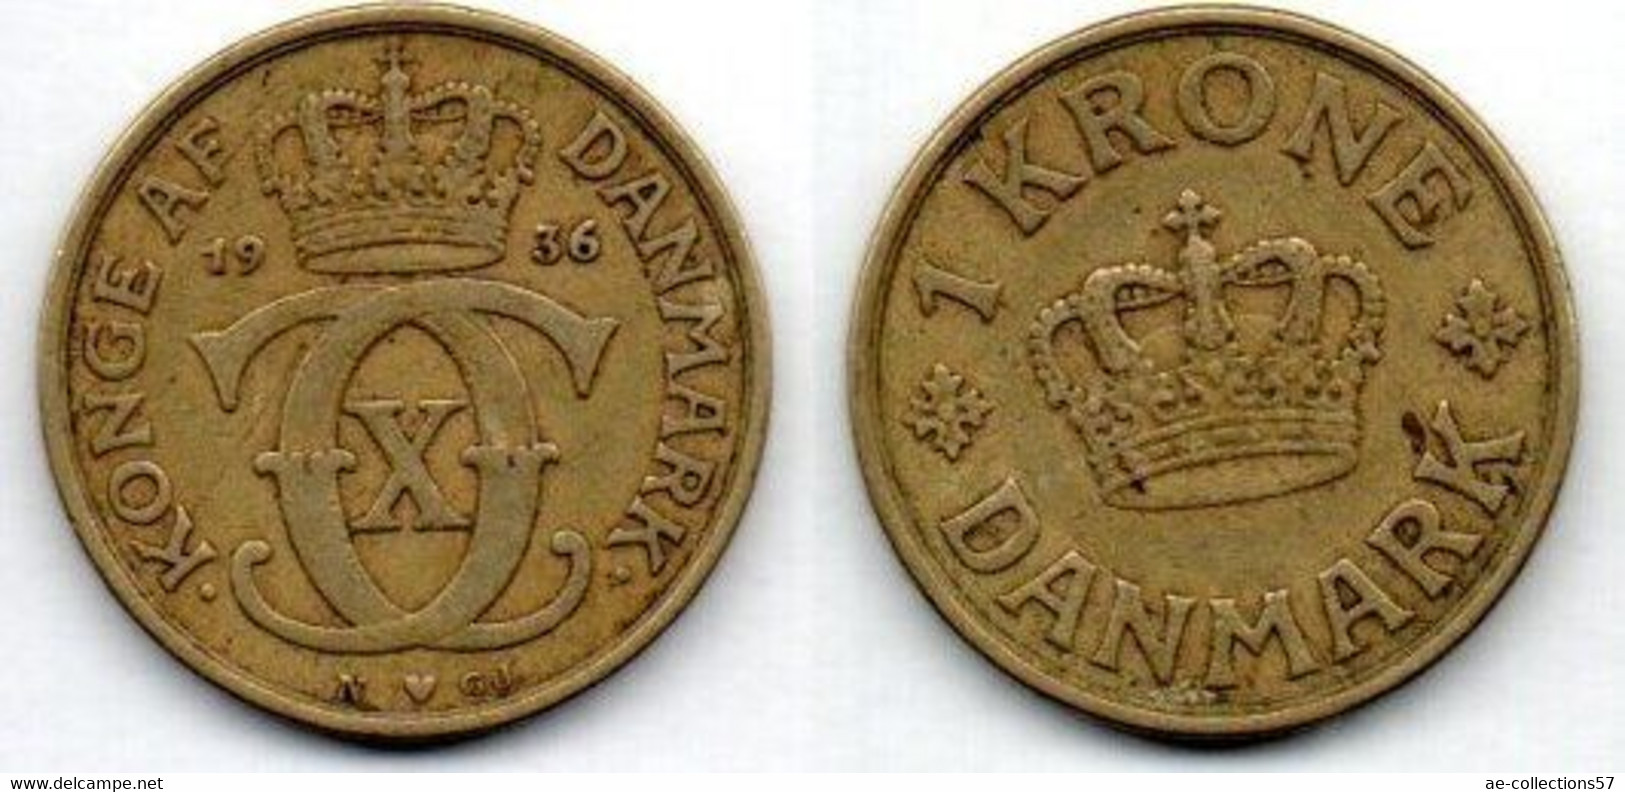 MA 18488 /  Danemark - Denmark - Dänemark 1 Krone 1936 NGJ TB+ - Denmark